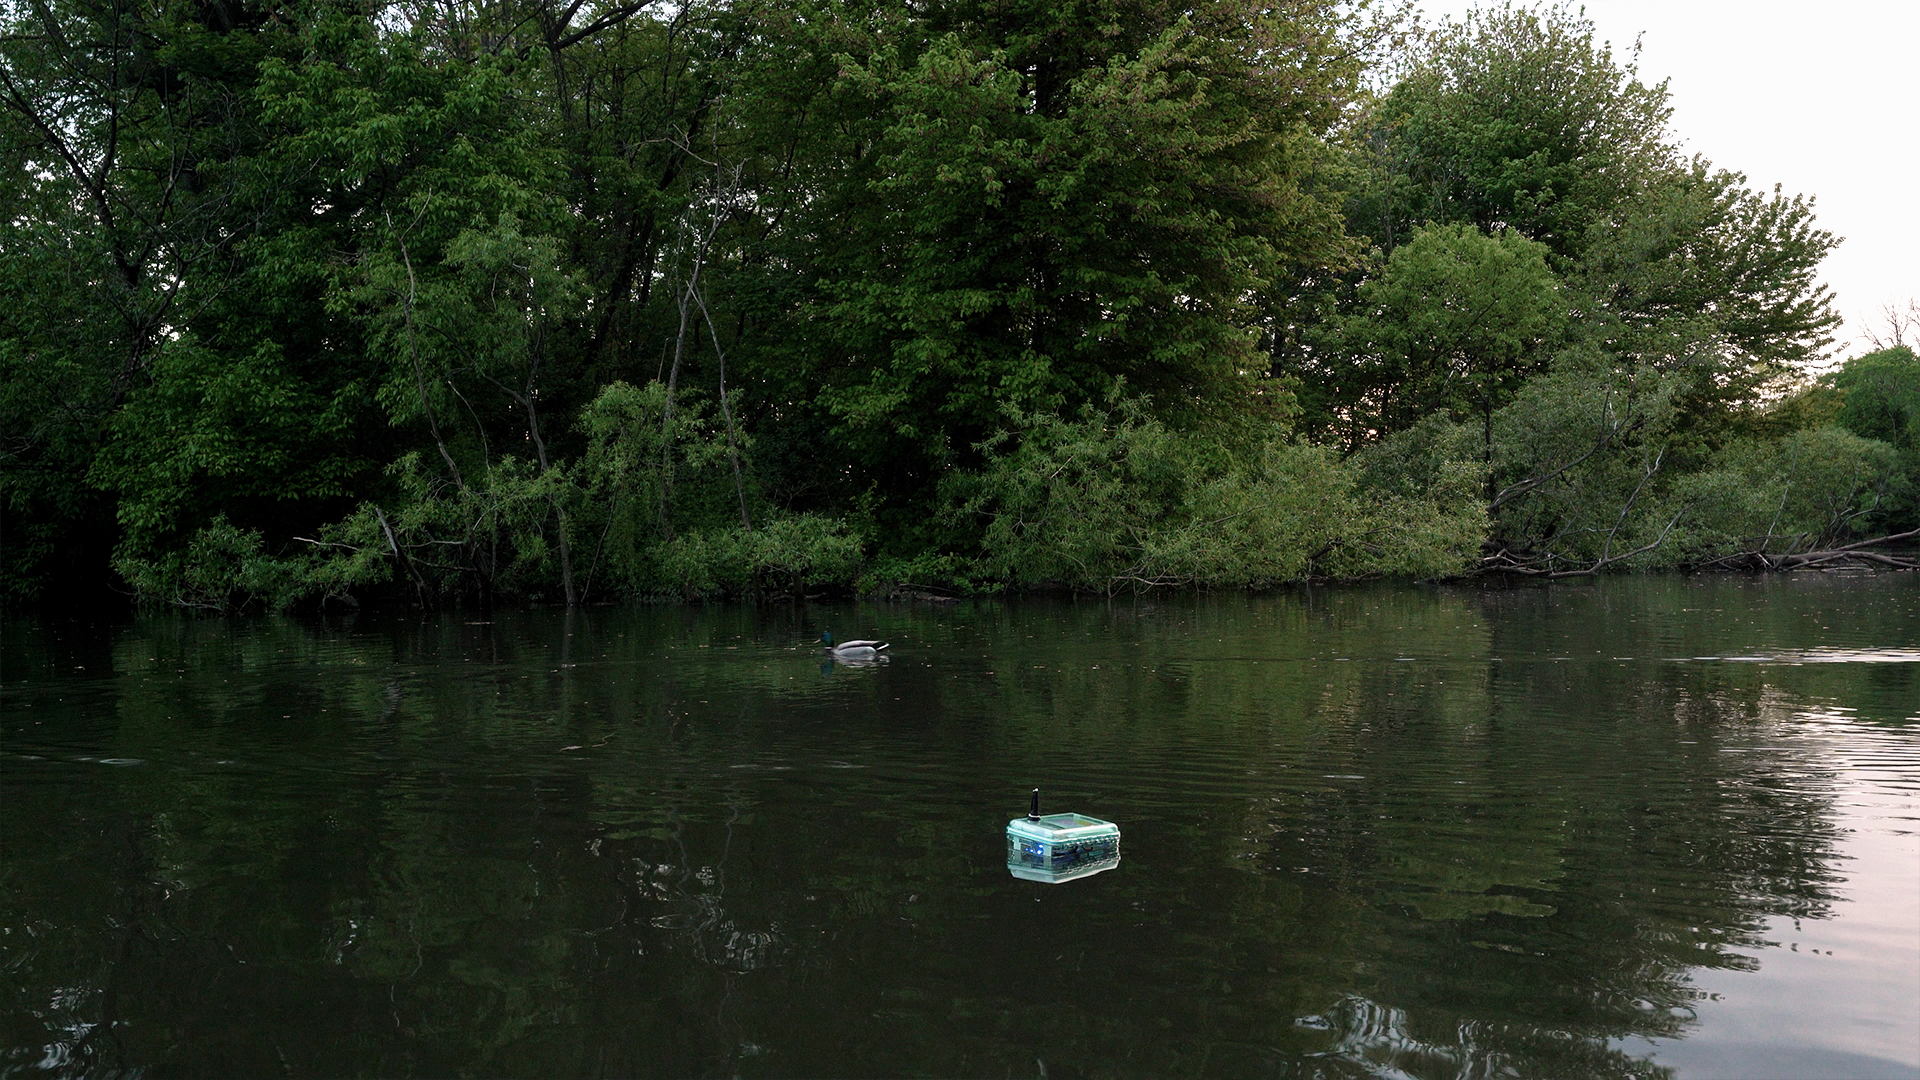 Bockey floating on water at Prospect Park Lake